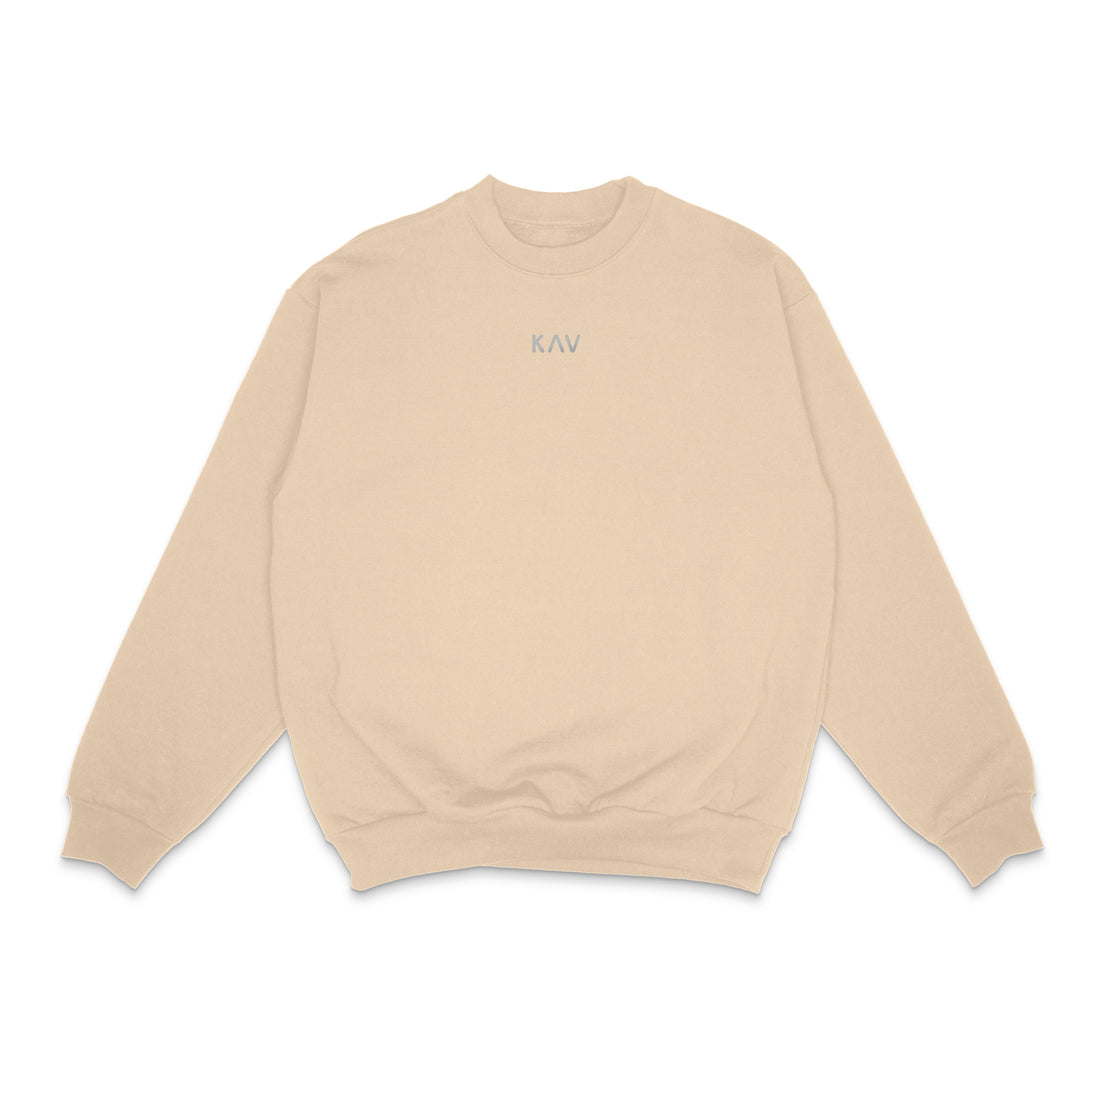 Beige Original Sweater